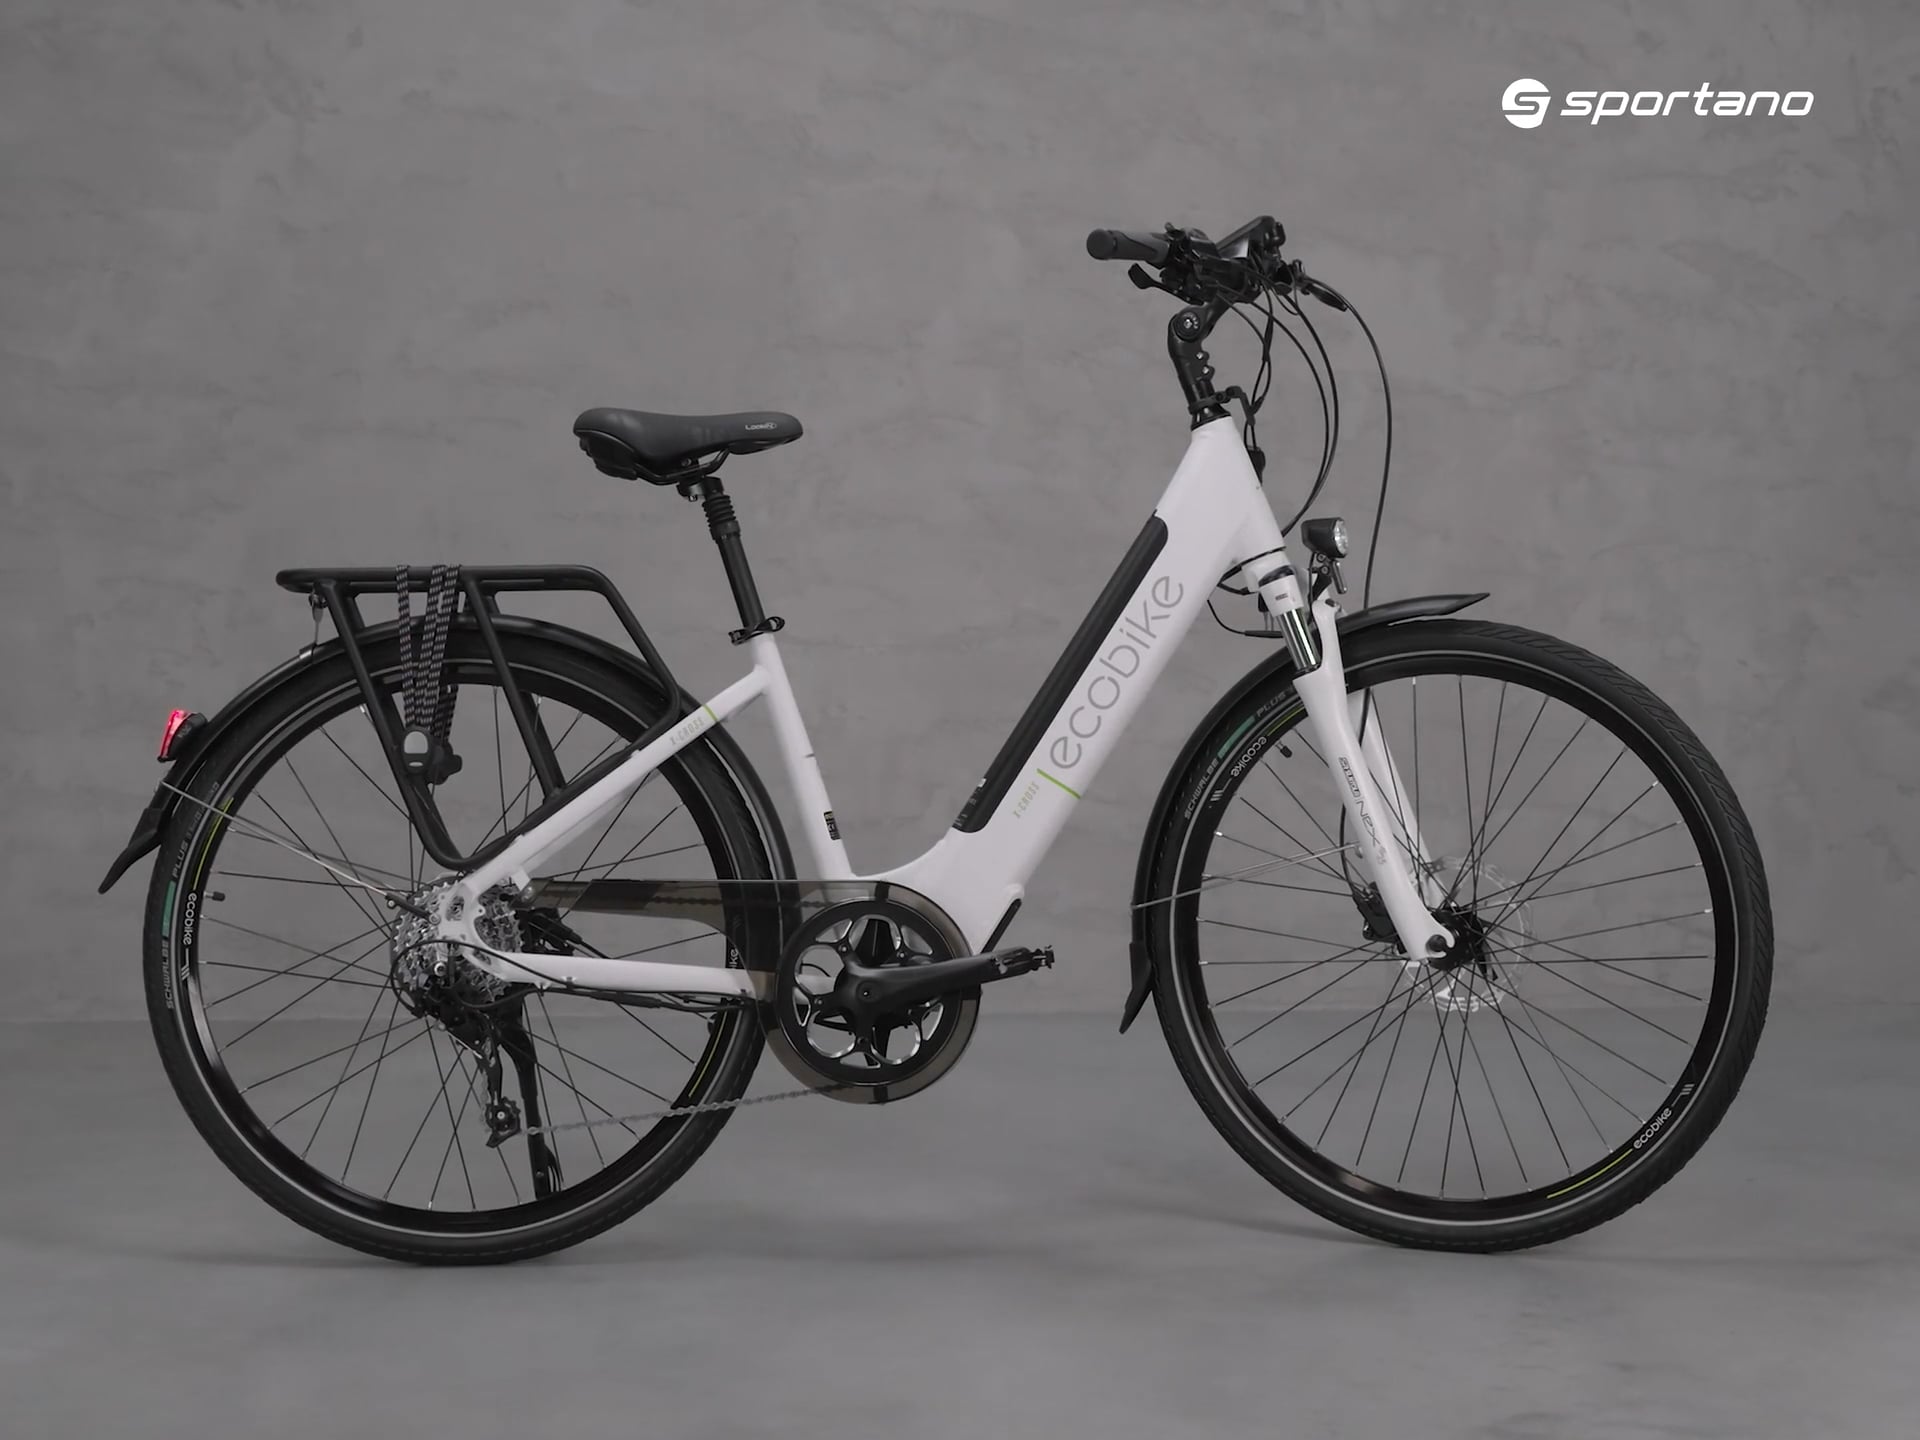 EcoBike X-Cross L 36V 17,5Ah 630Wh X-Cross LG bicicletta elettrica bianca